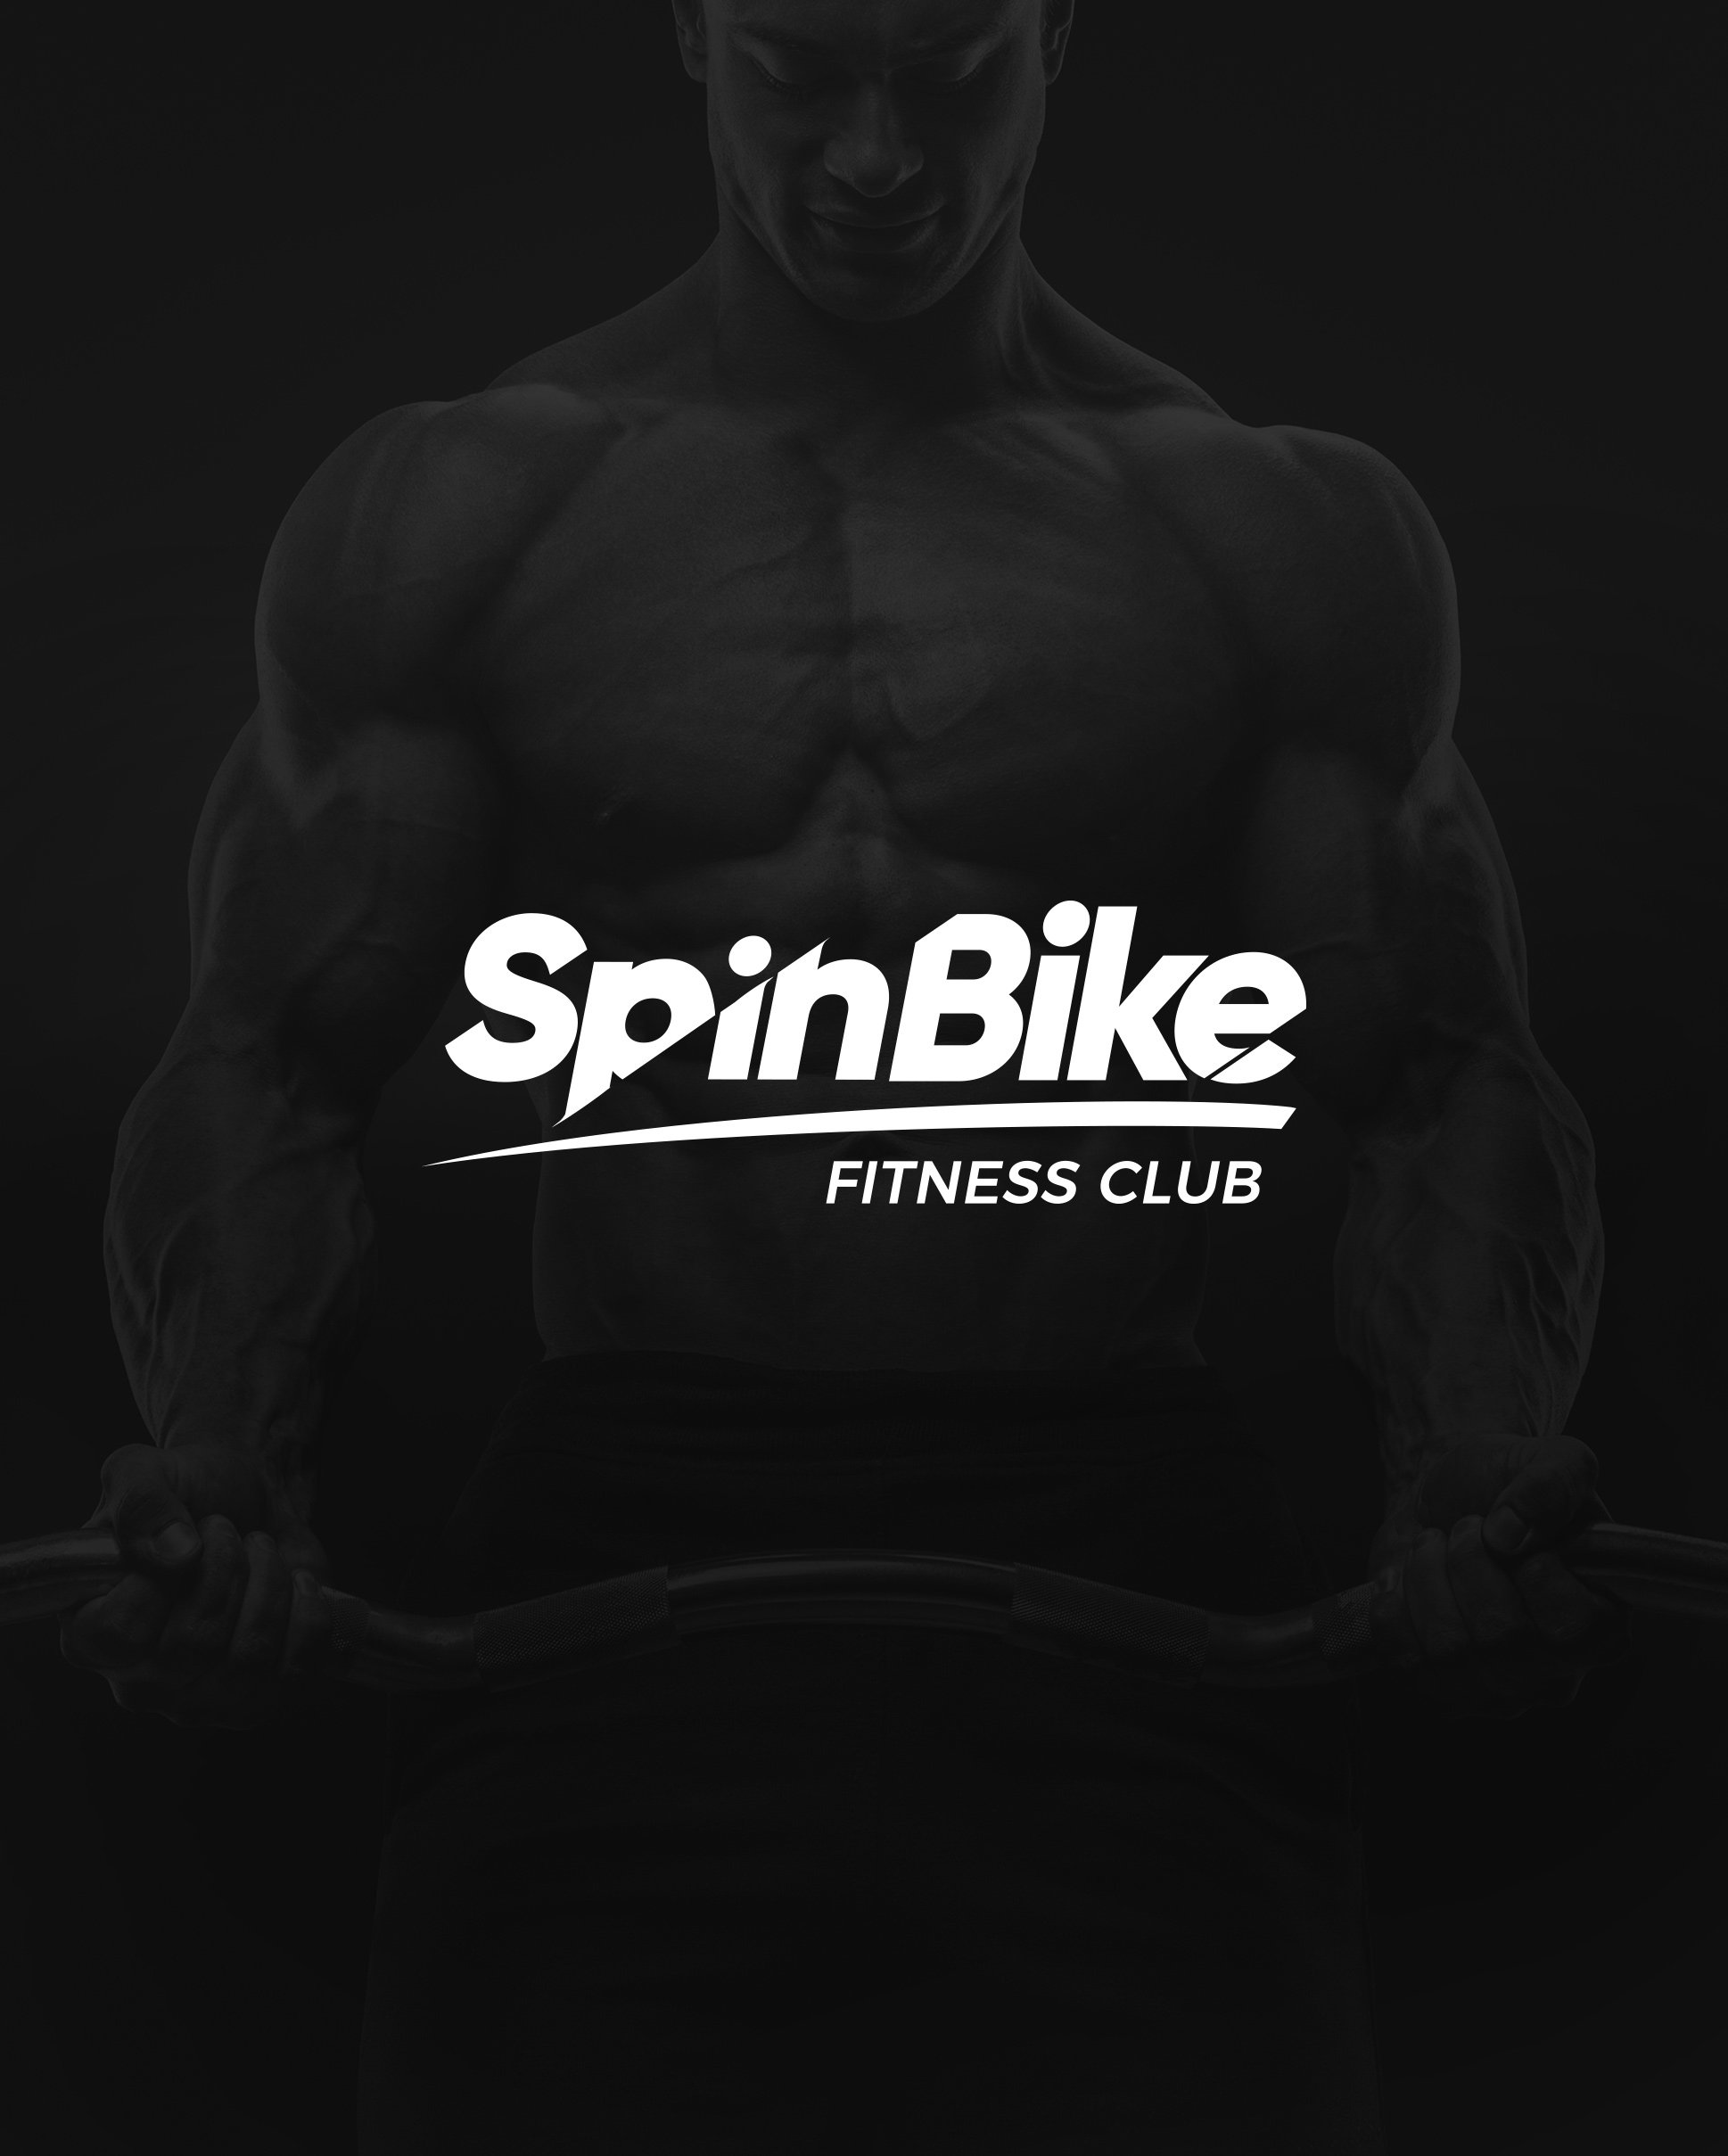 Spin Bike • Brand identity and social media design.